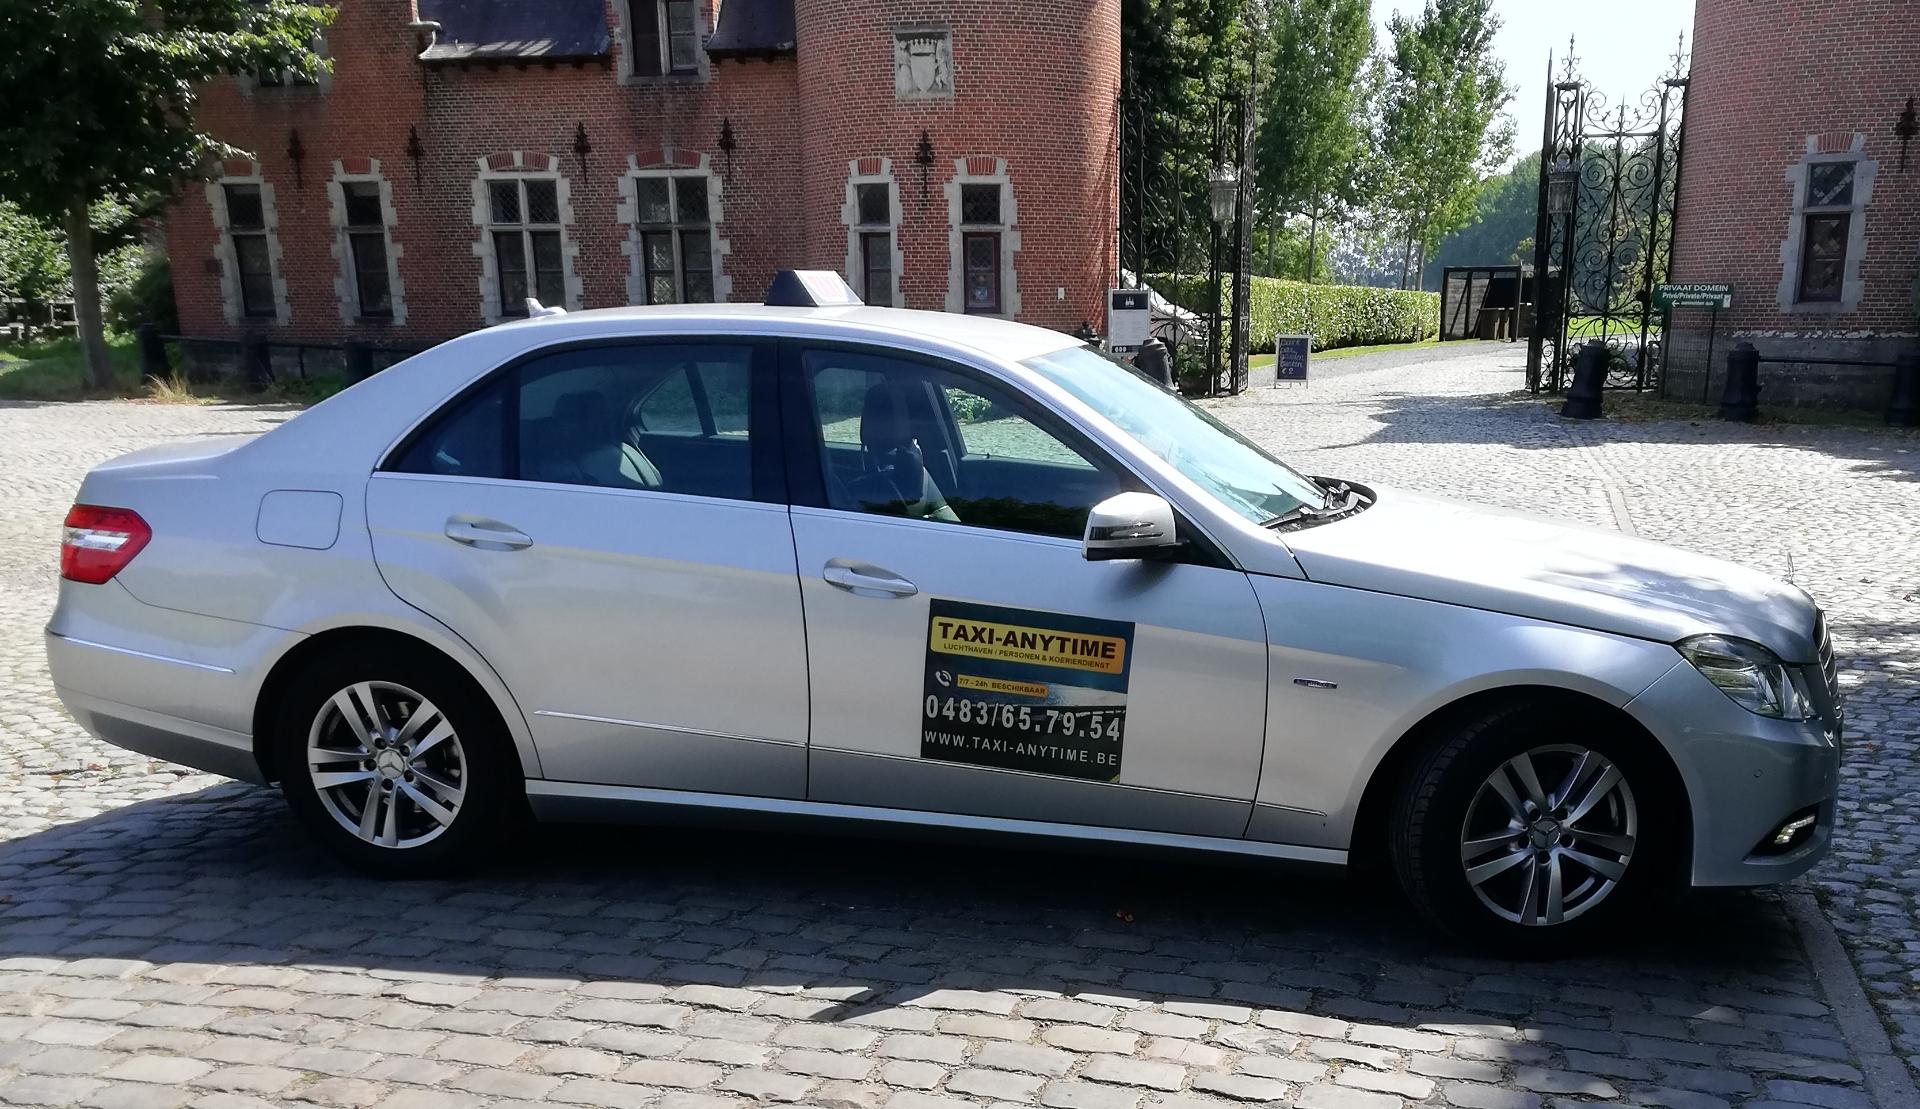 taxibedrijven Ukkel Taxi-Anytime